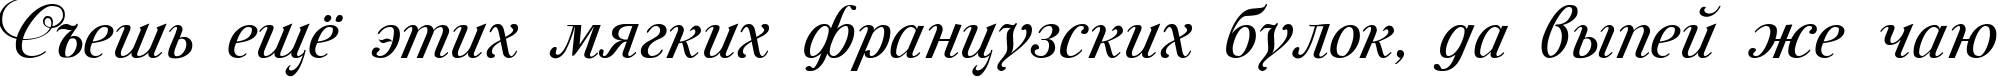 Пример написания шрифтом Mon Amour Two Medium текста на русском